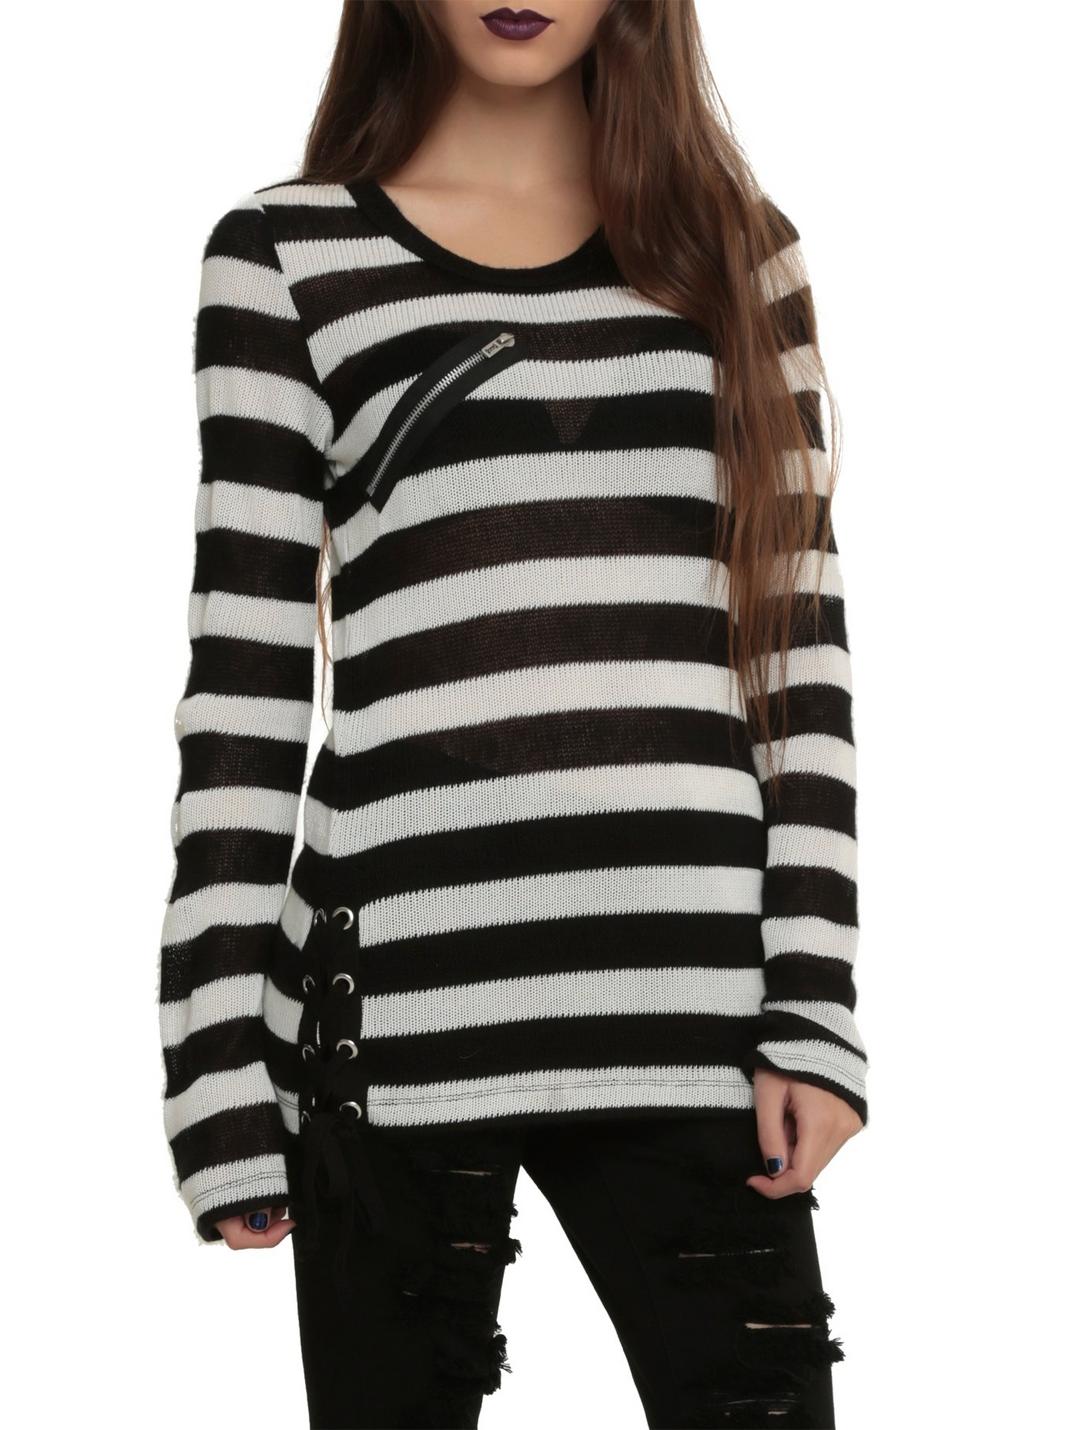 Royal Bones By Tripp Black & White Striped Tunic Sweater, BLACK, hi-res